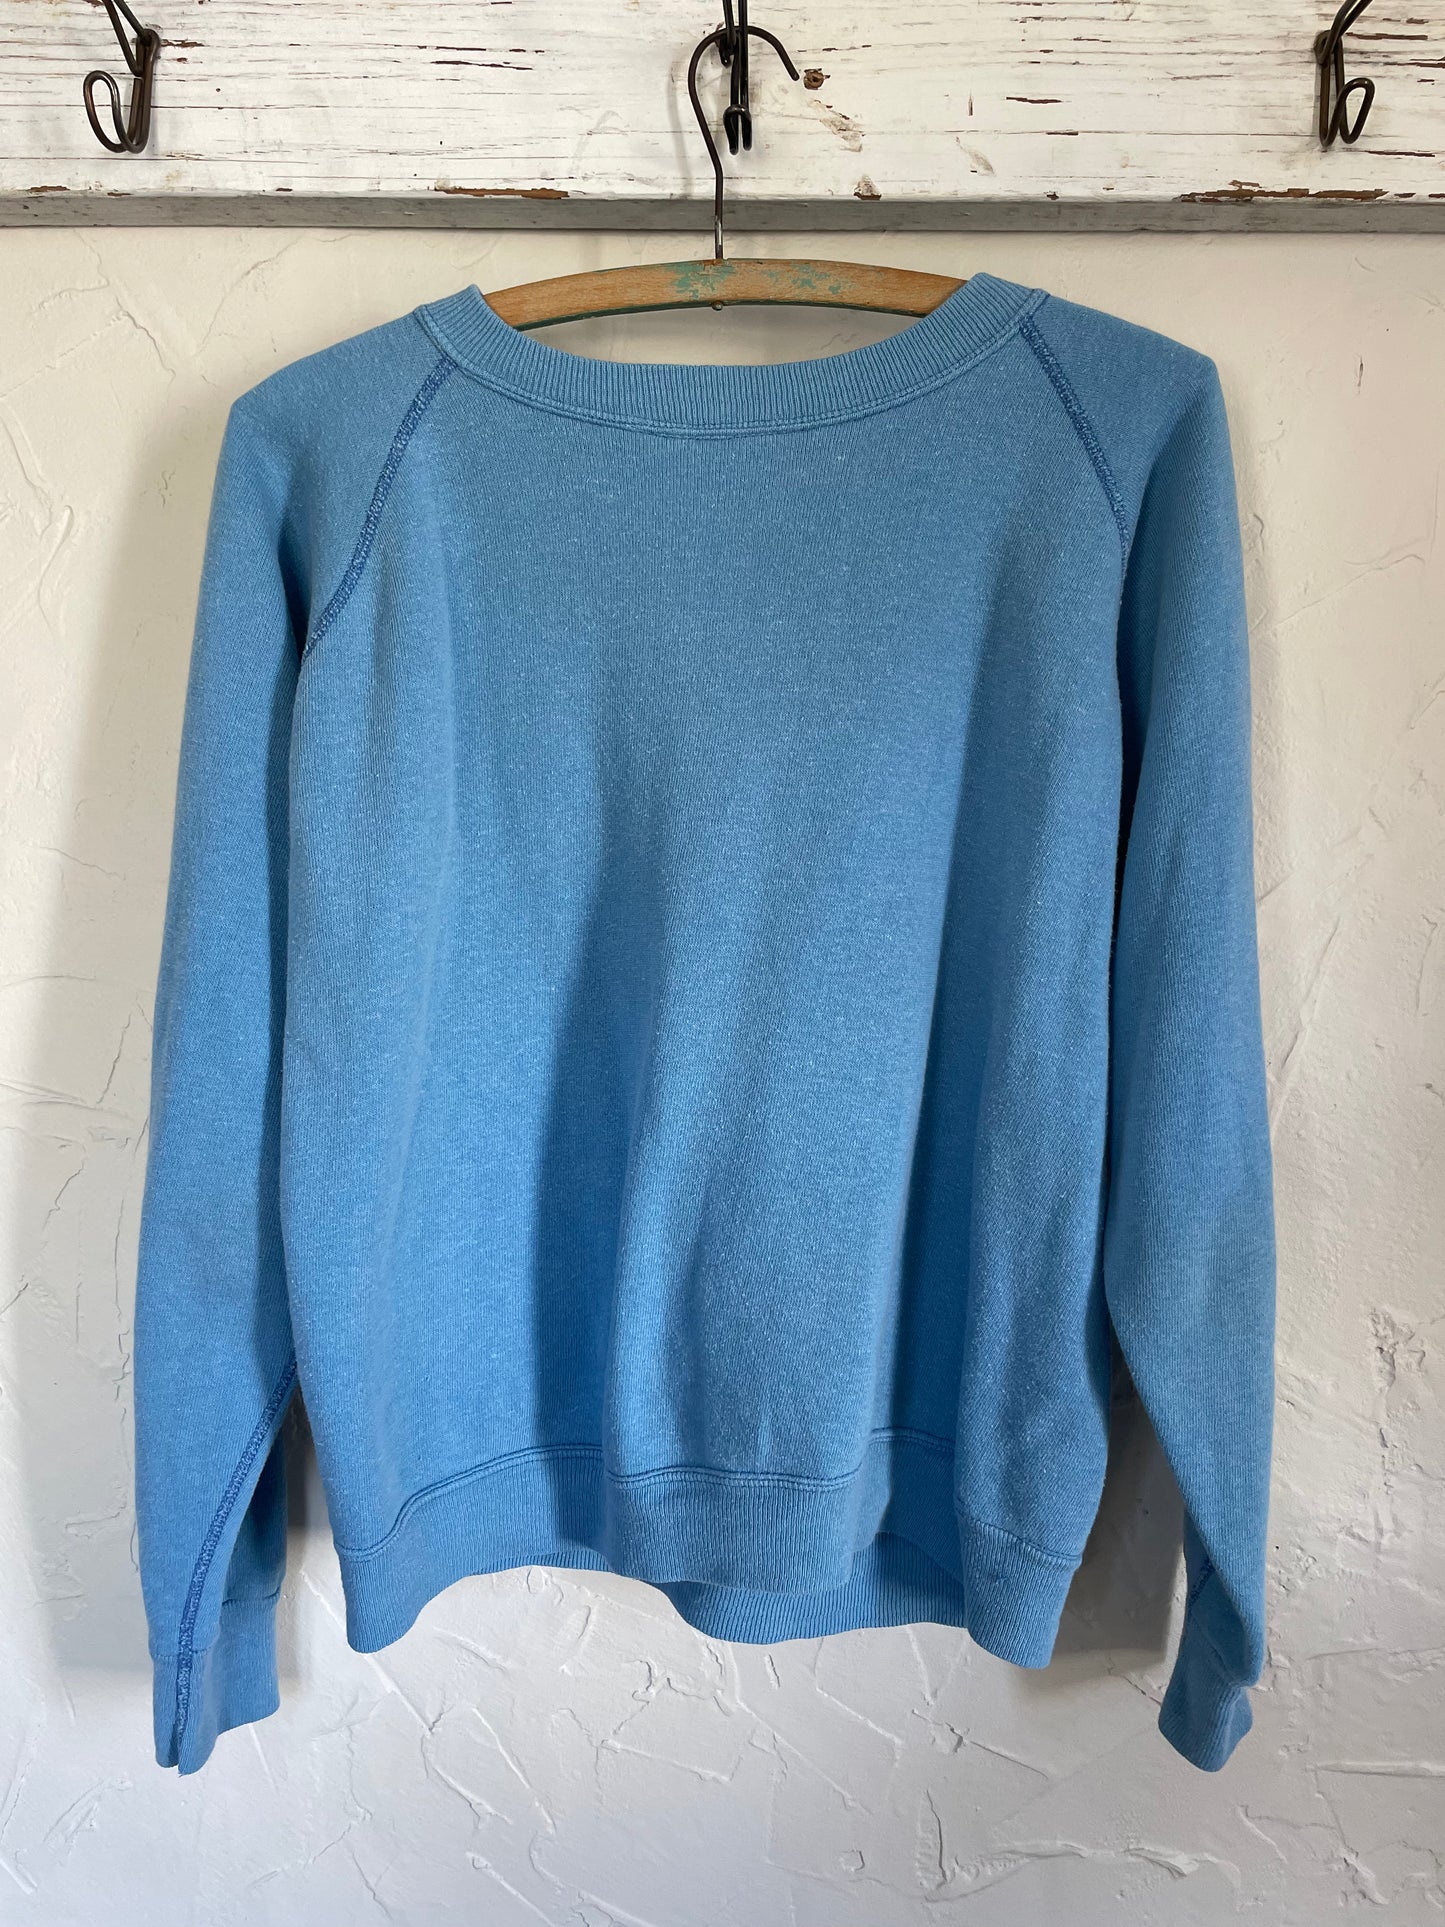 70s Middlebury College Sweatshirt